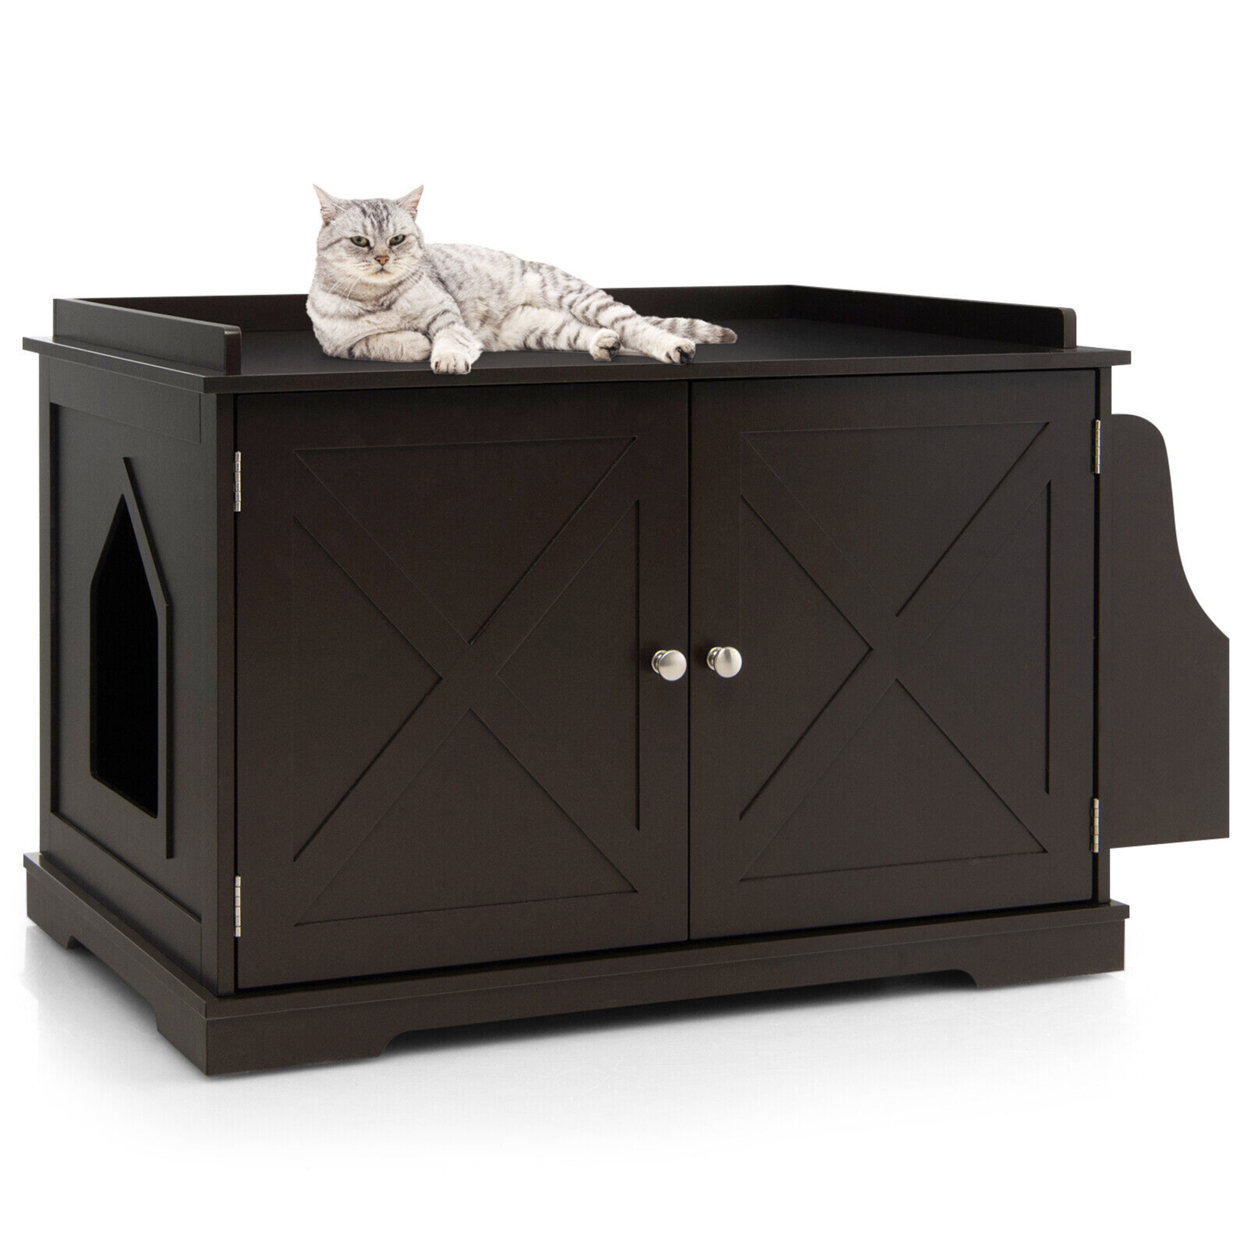 Large Side Table Furniture Wooden Cat Litter Box Enclosure Magazine Rack - White